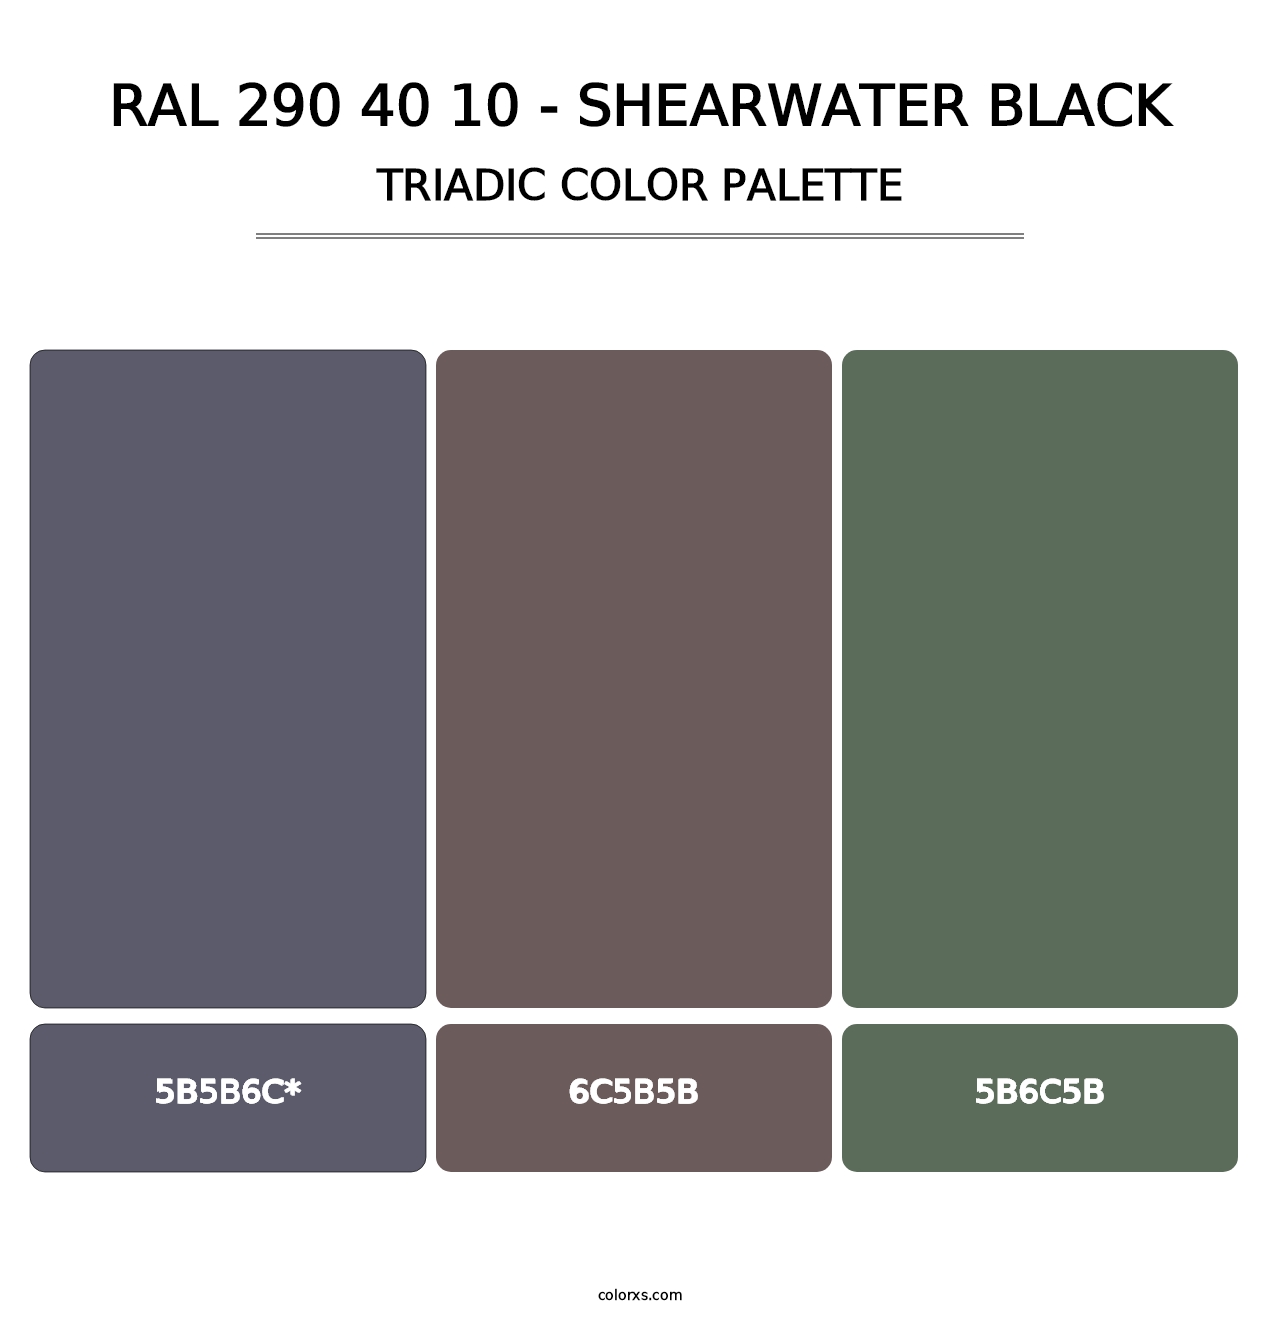 RAL 290 40 10 - Shearwater Black - Triadic Color Palette